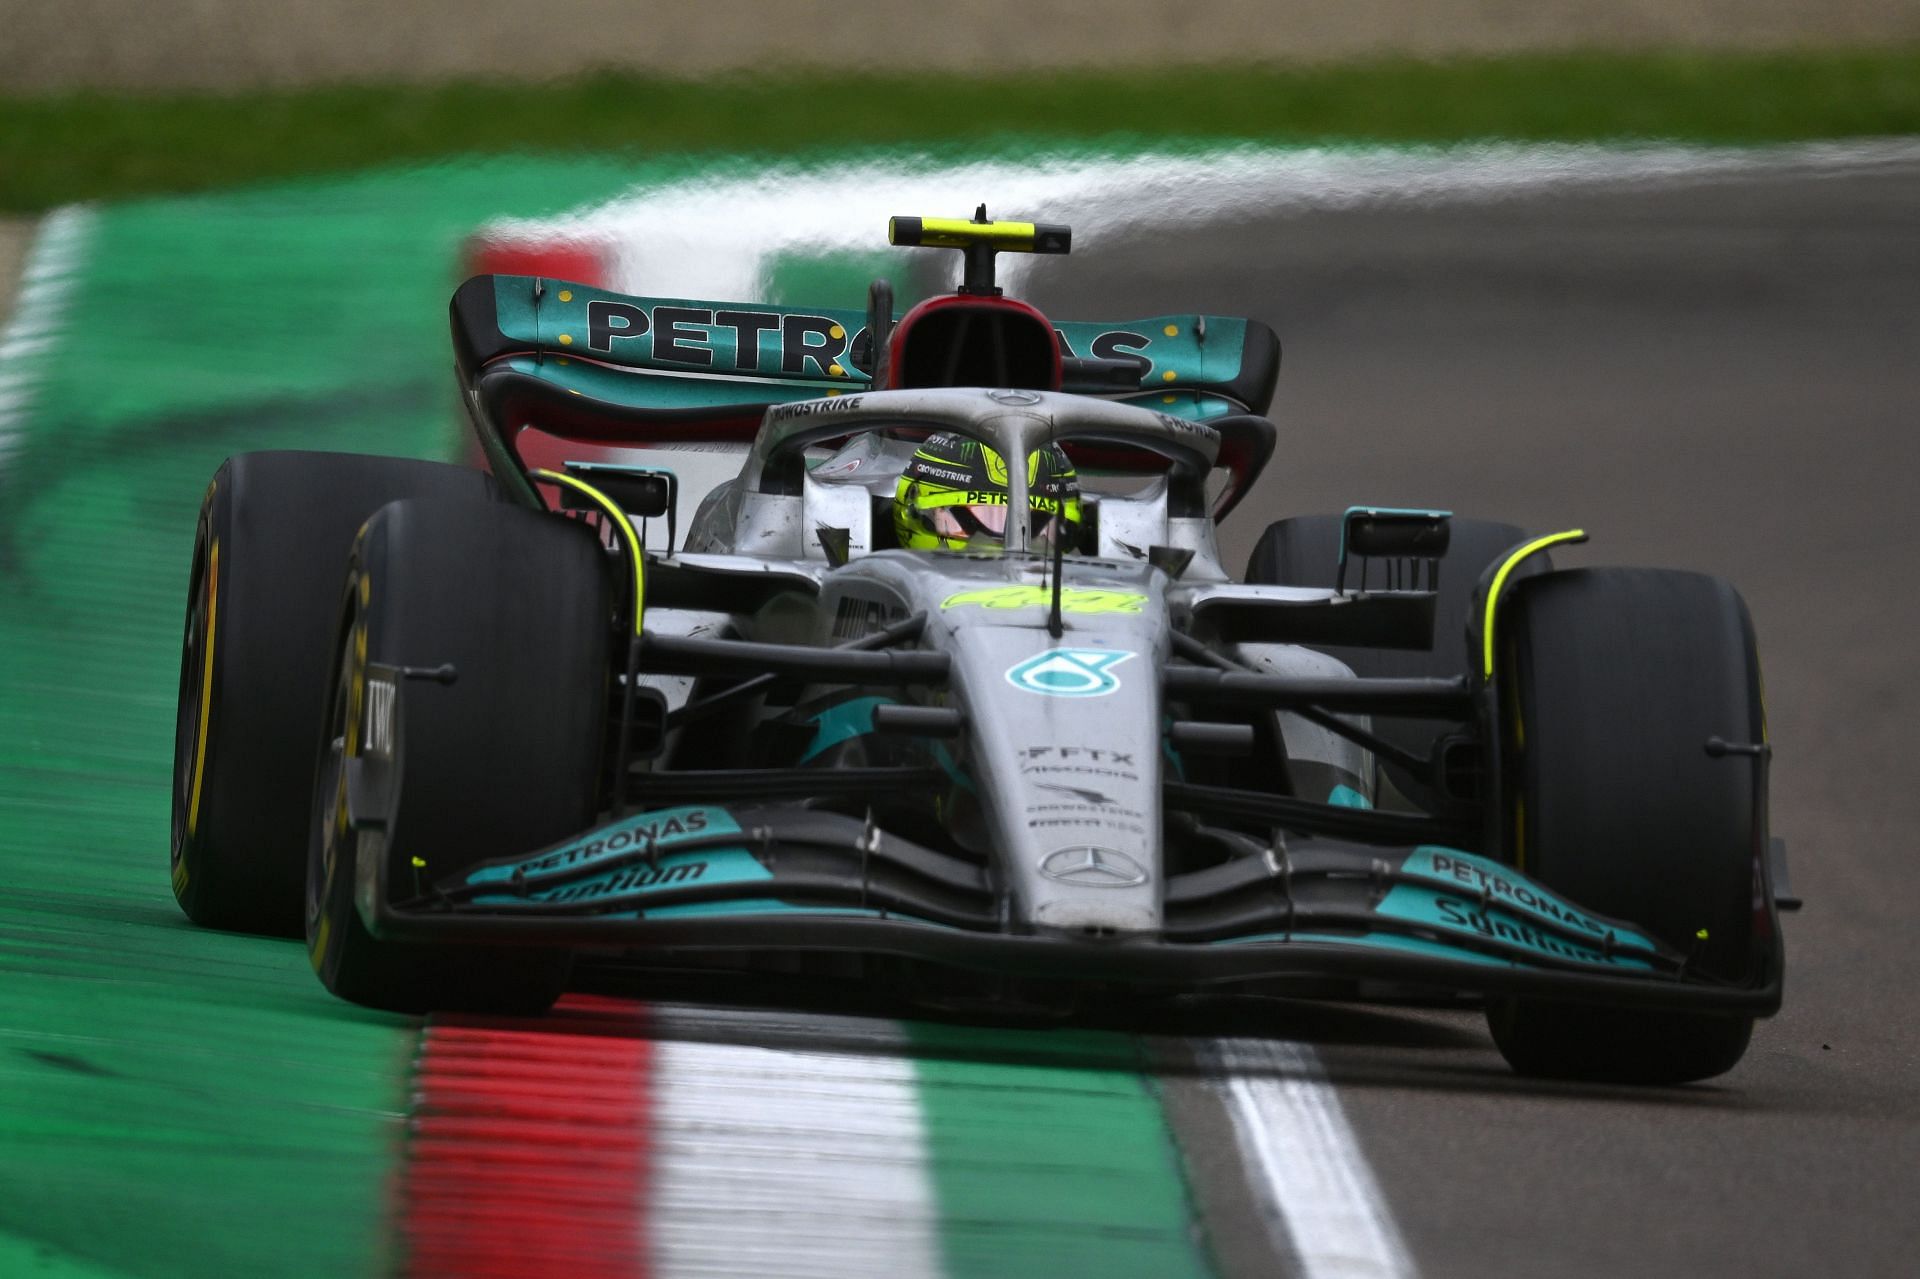 F1 Grand Prix of Emilia Romagna - Lewis Hamilton struggled for pace in Imola